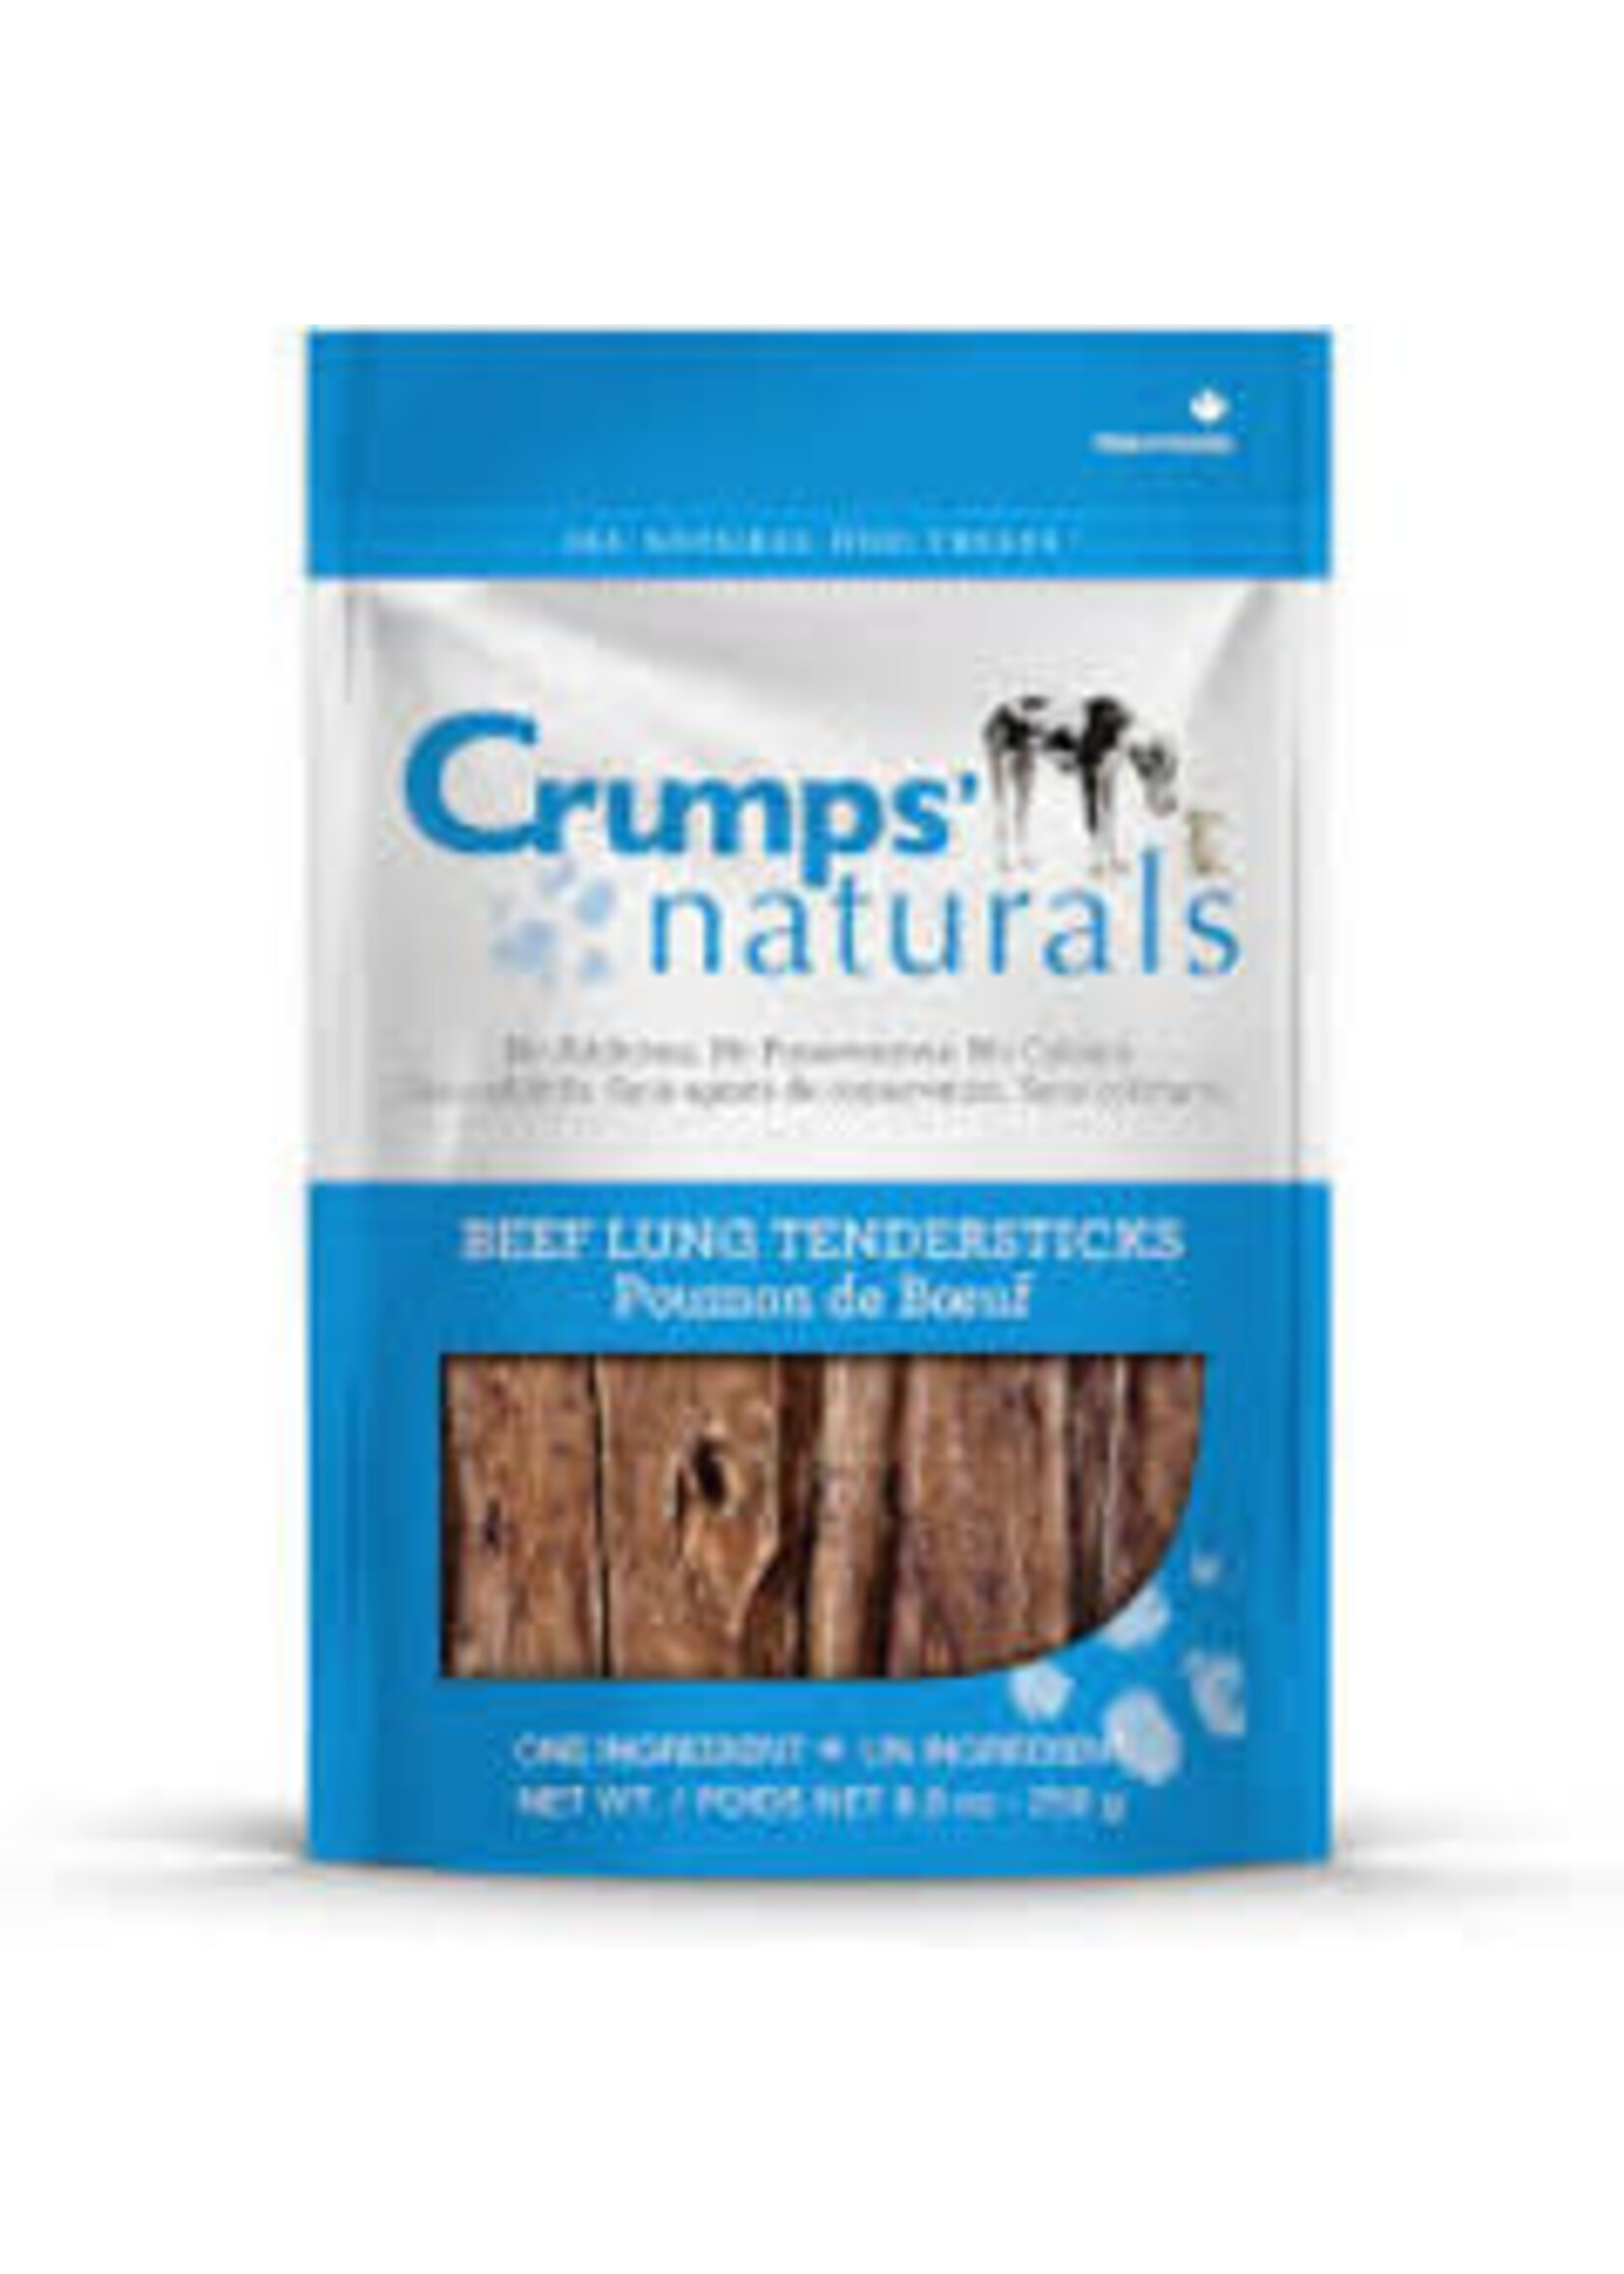 Crumps' Naturals Crumps Naturals - Beef Tenderstick 1.9oz